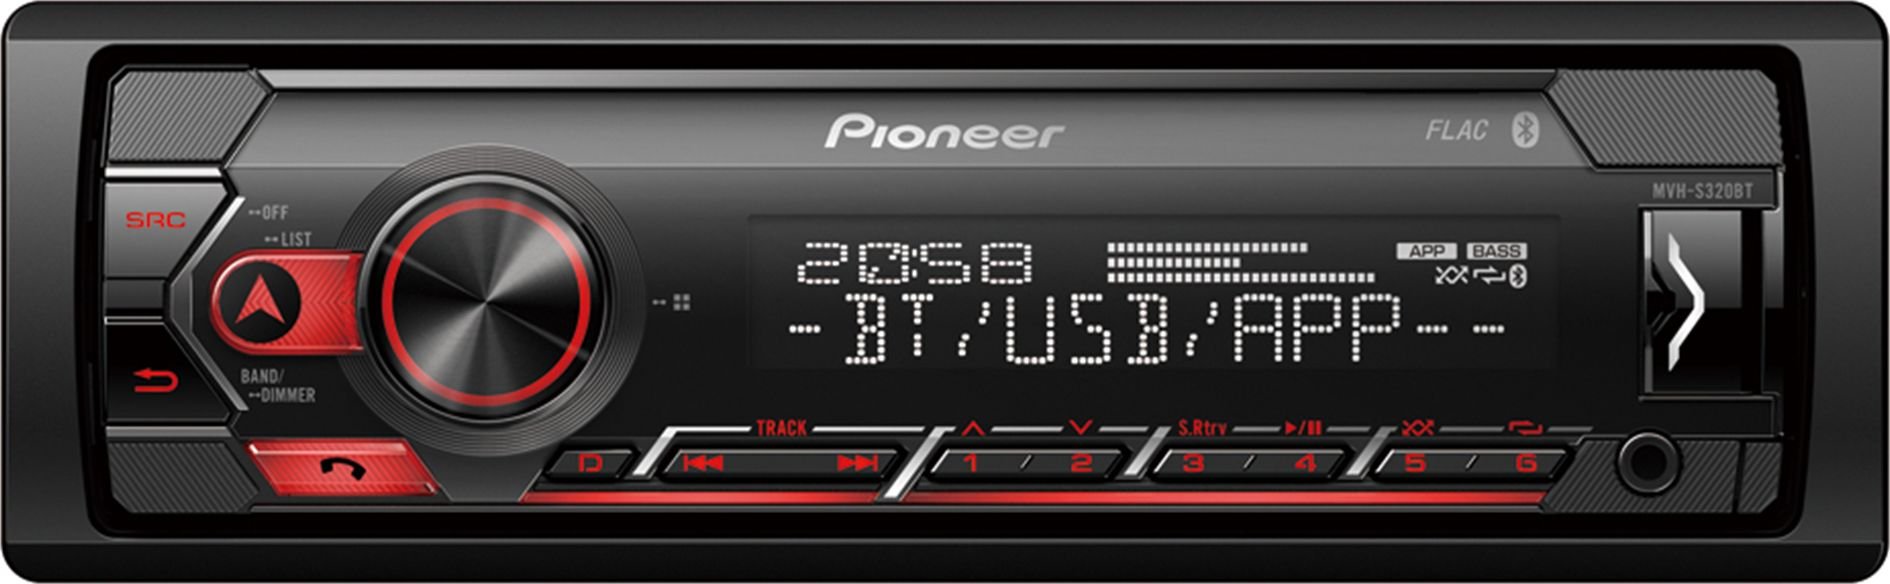 Radio MP3 auto Pioneer MVH-S320BT, 1DIN, Bluetooth, Spotify, 4x50W, USB, compatibil cu dispozitive Android, taste Rosu, display Alb